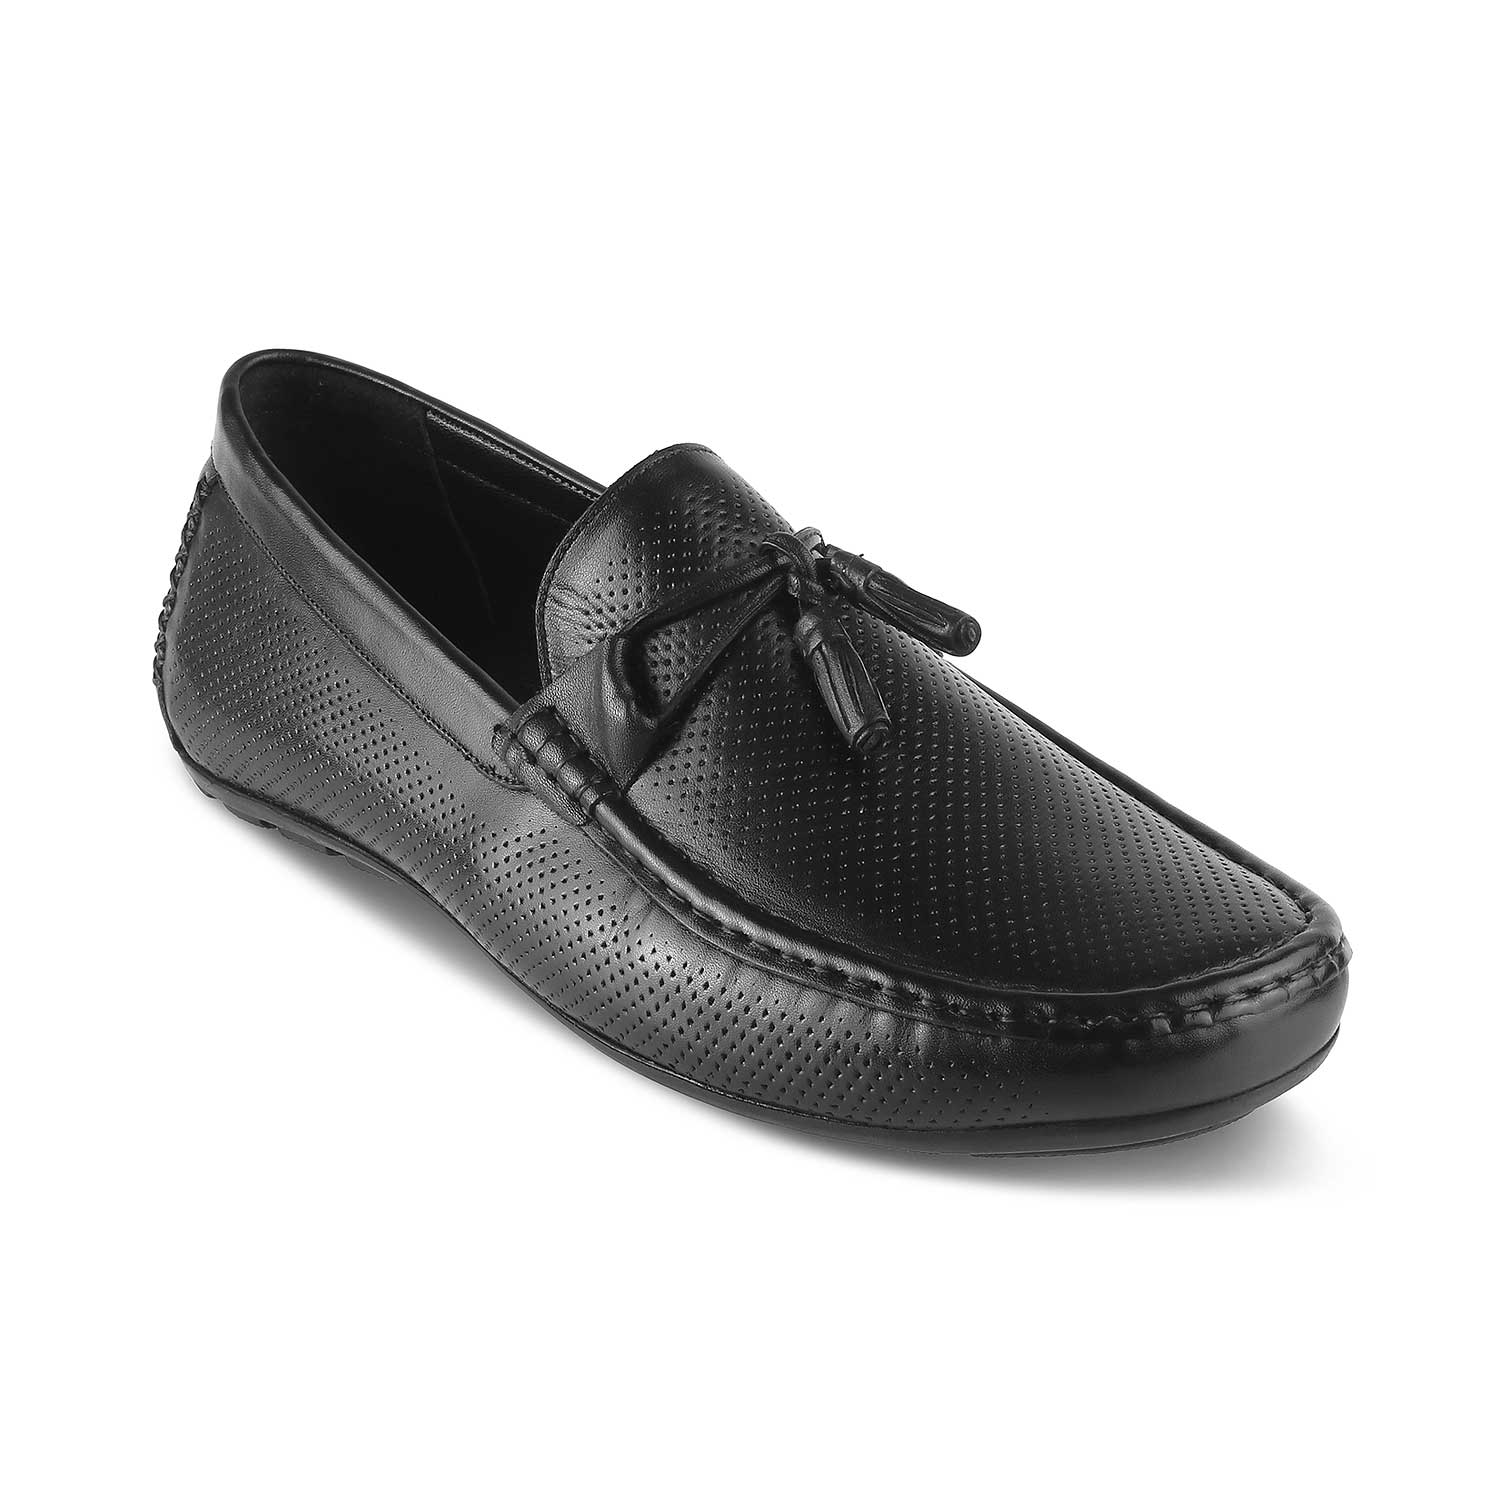 Otie Black Men's Leather Loafers Online at Tresmode.com